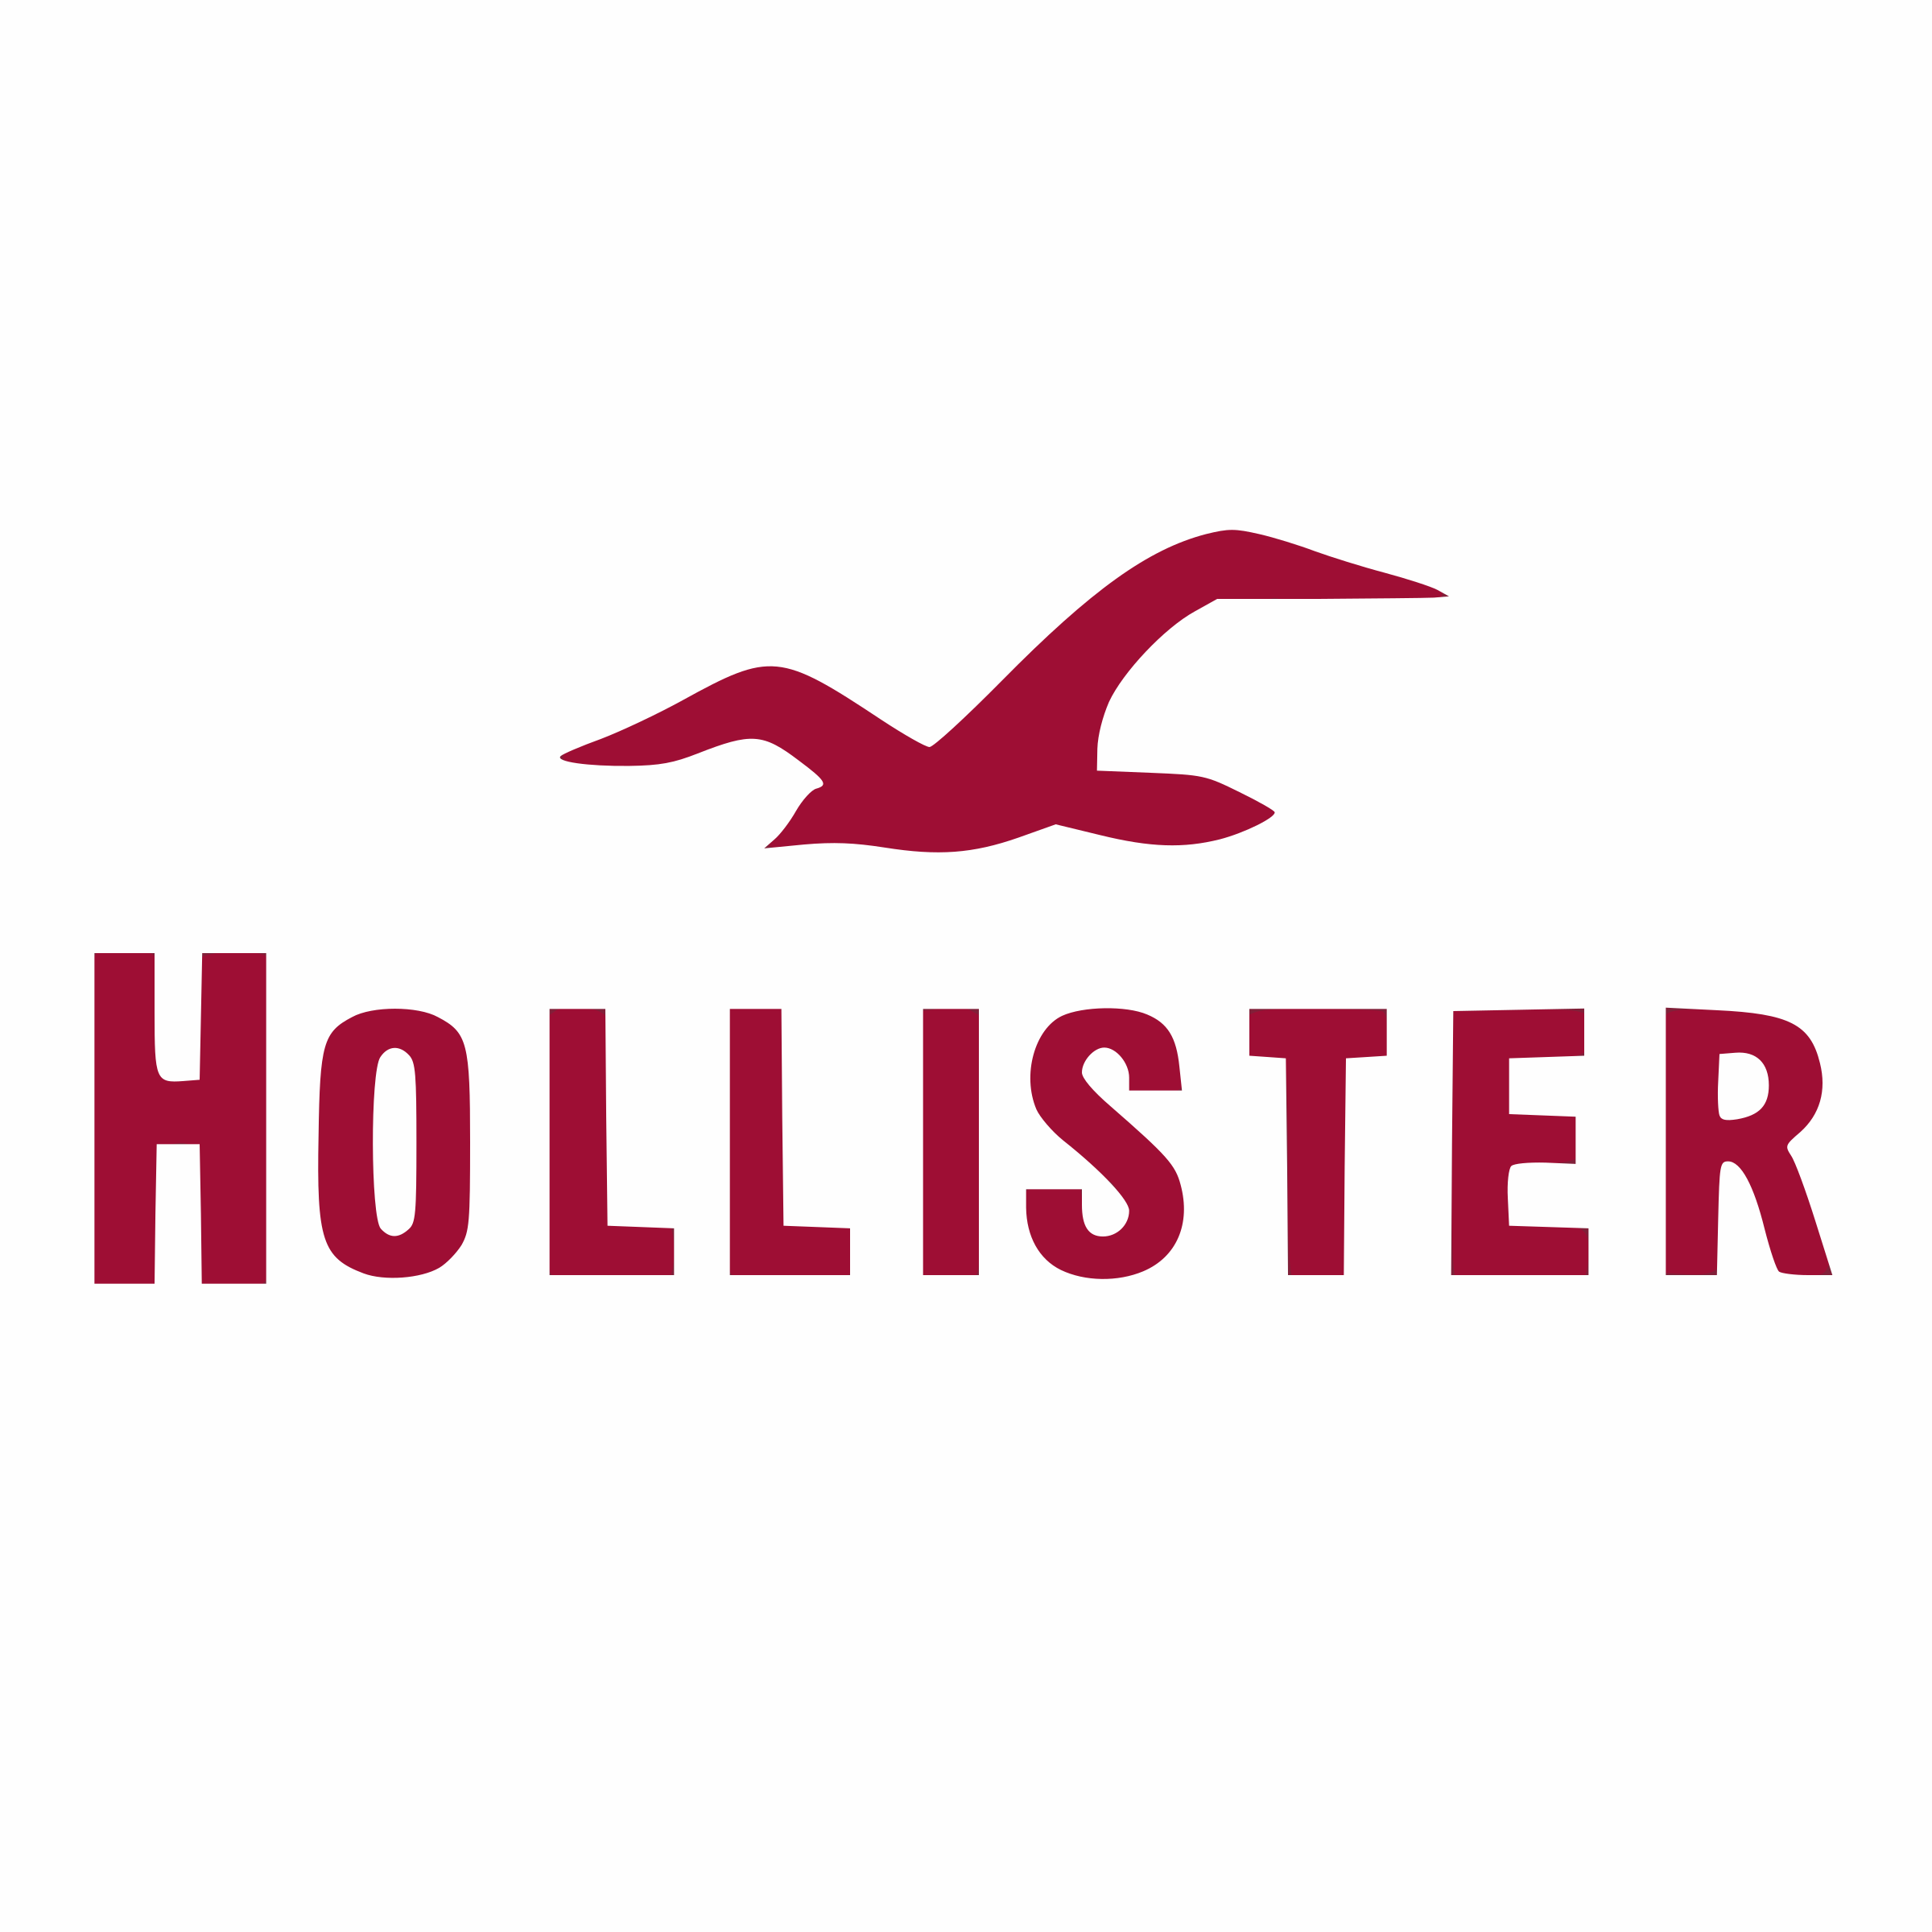 hollister-logo ktmart.vn 0